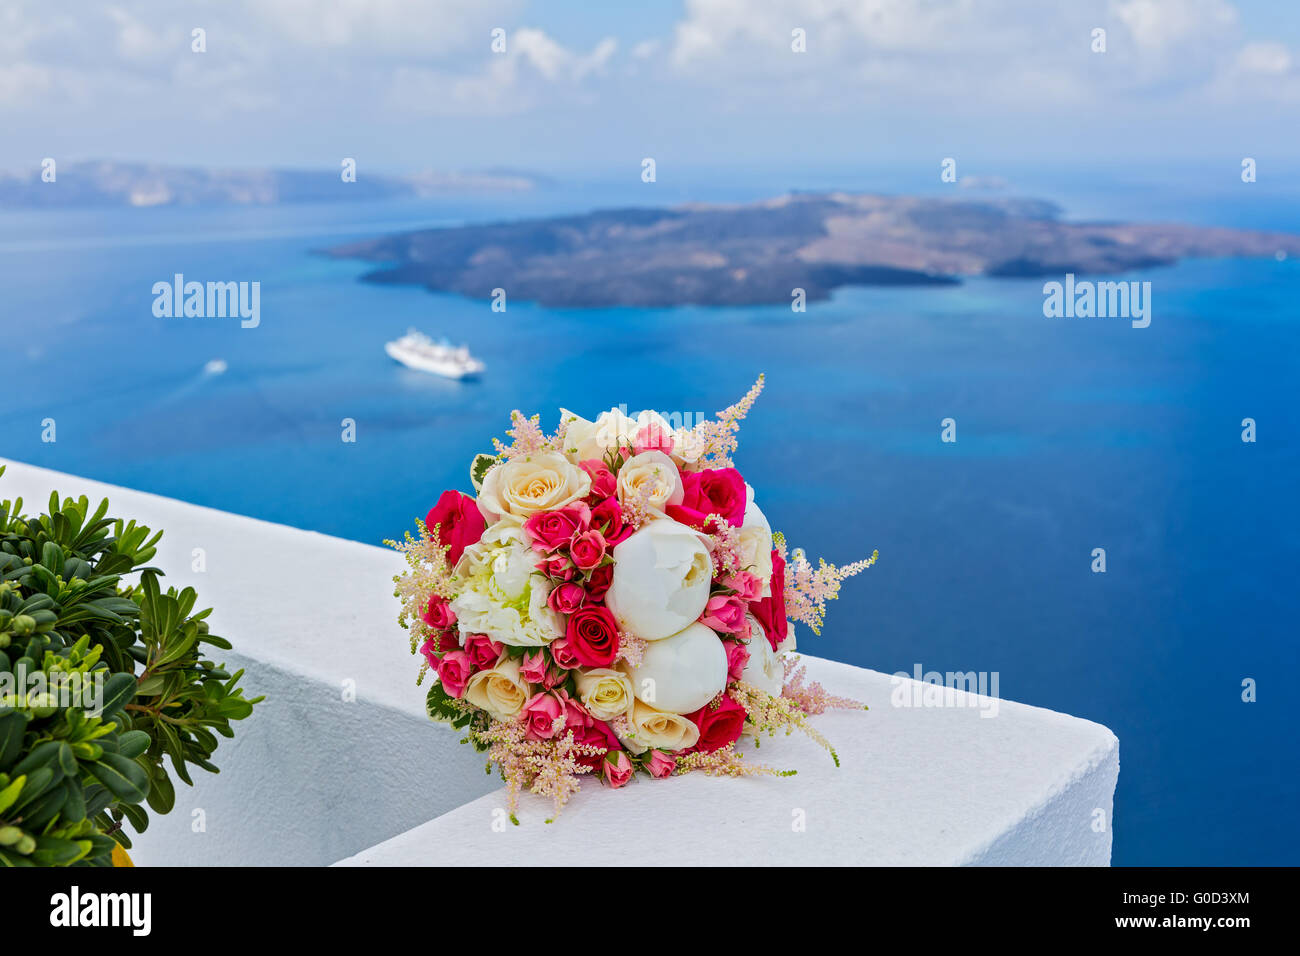 White paper flowers decoration on light green backdrop, bridal greeting  card, ornamental background. Digital 3d render illustration Stock Photo -  Alamy